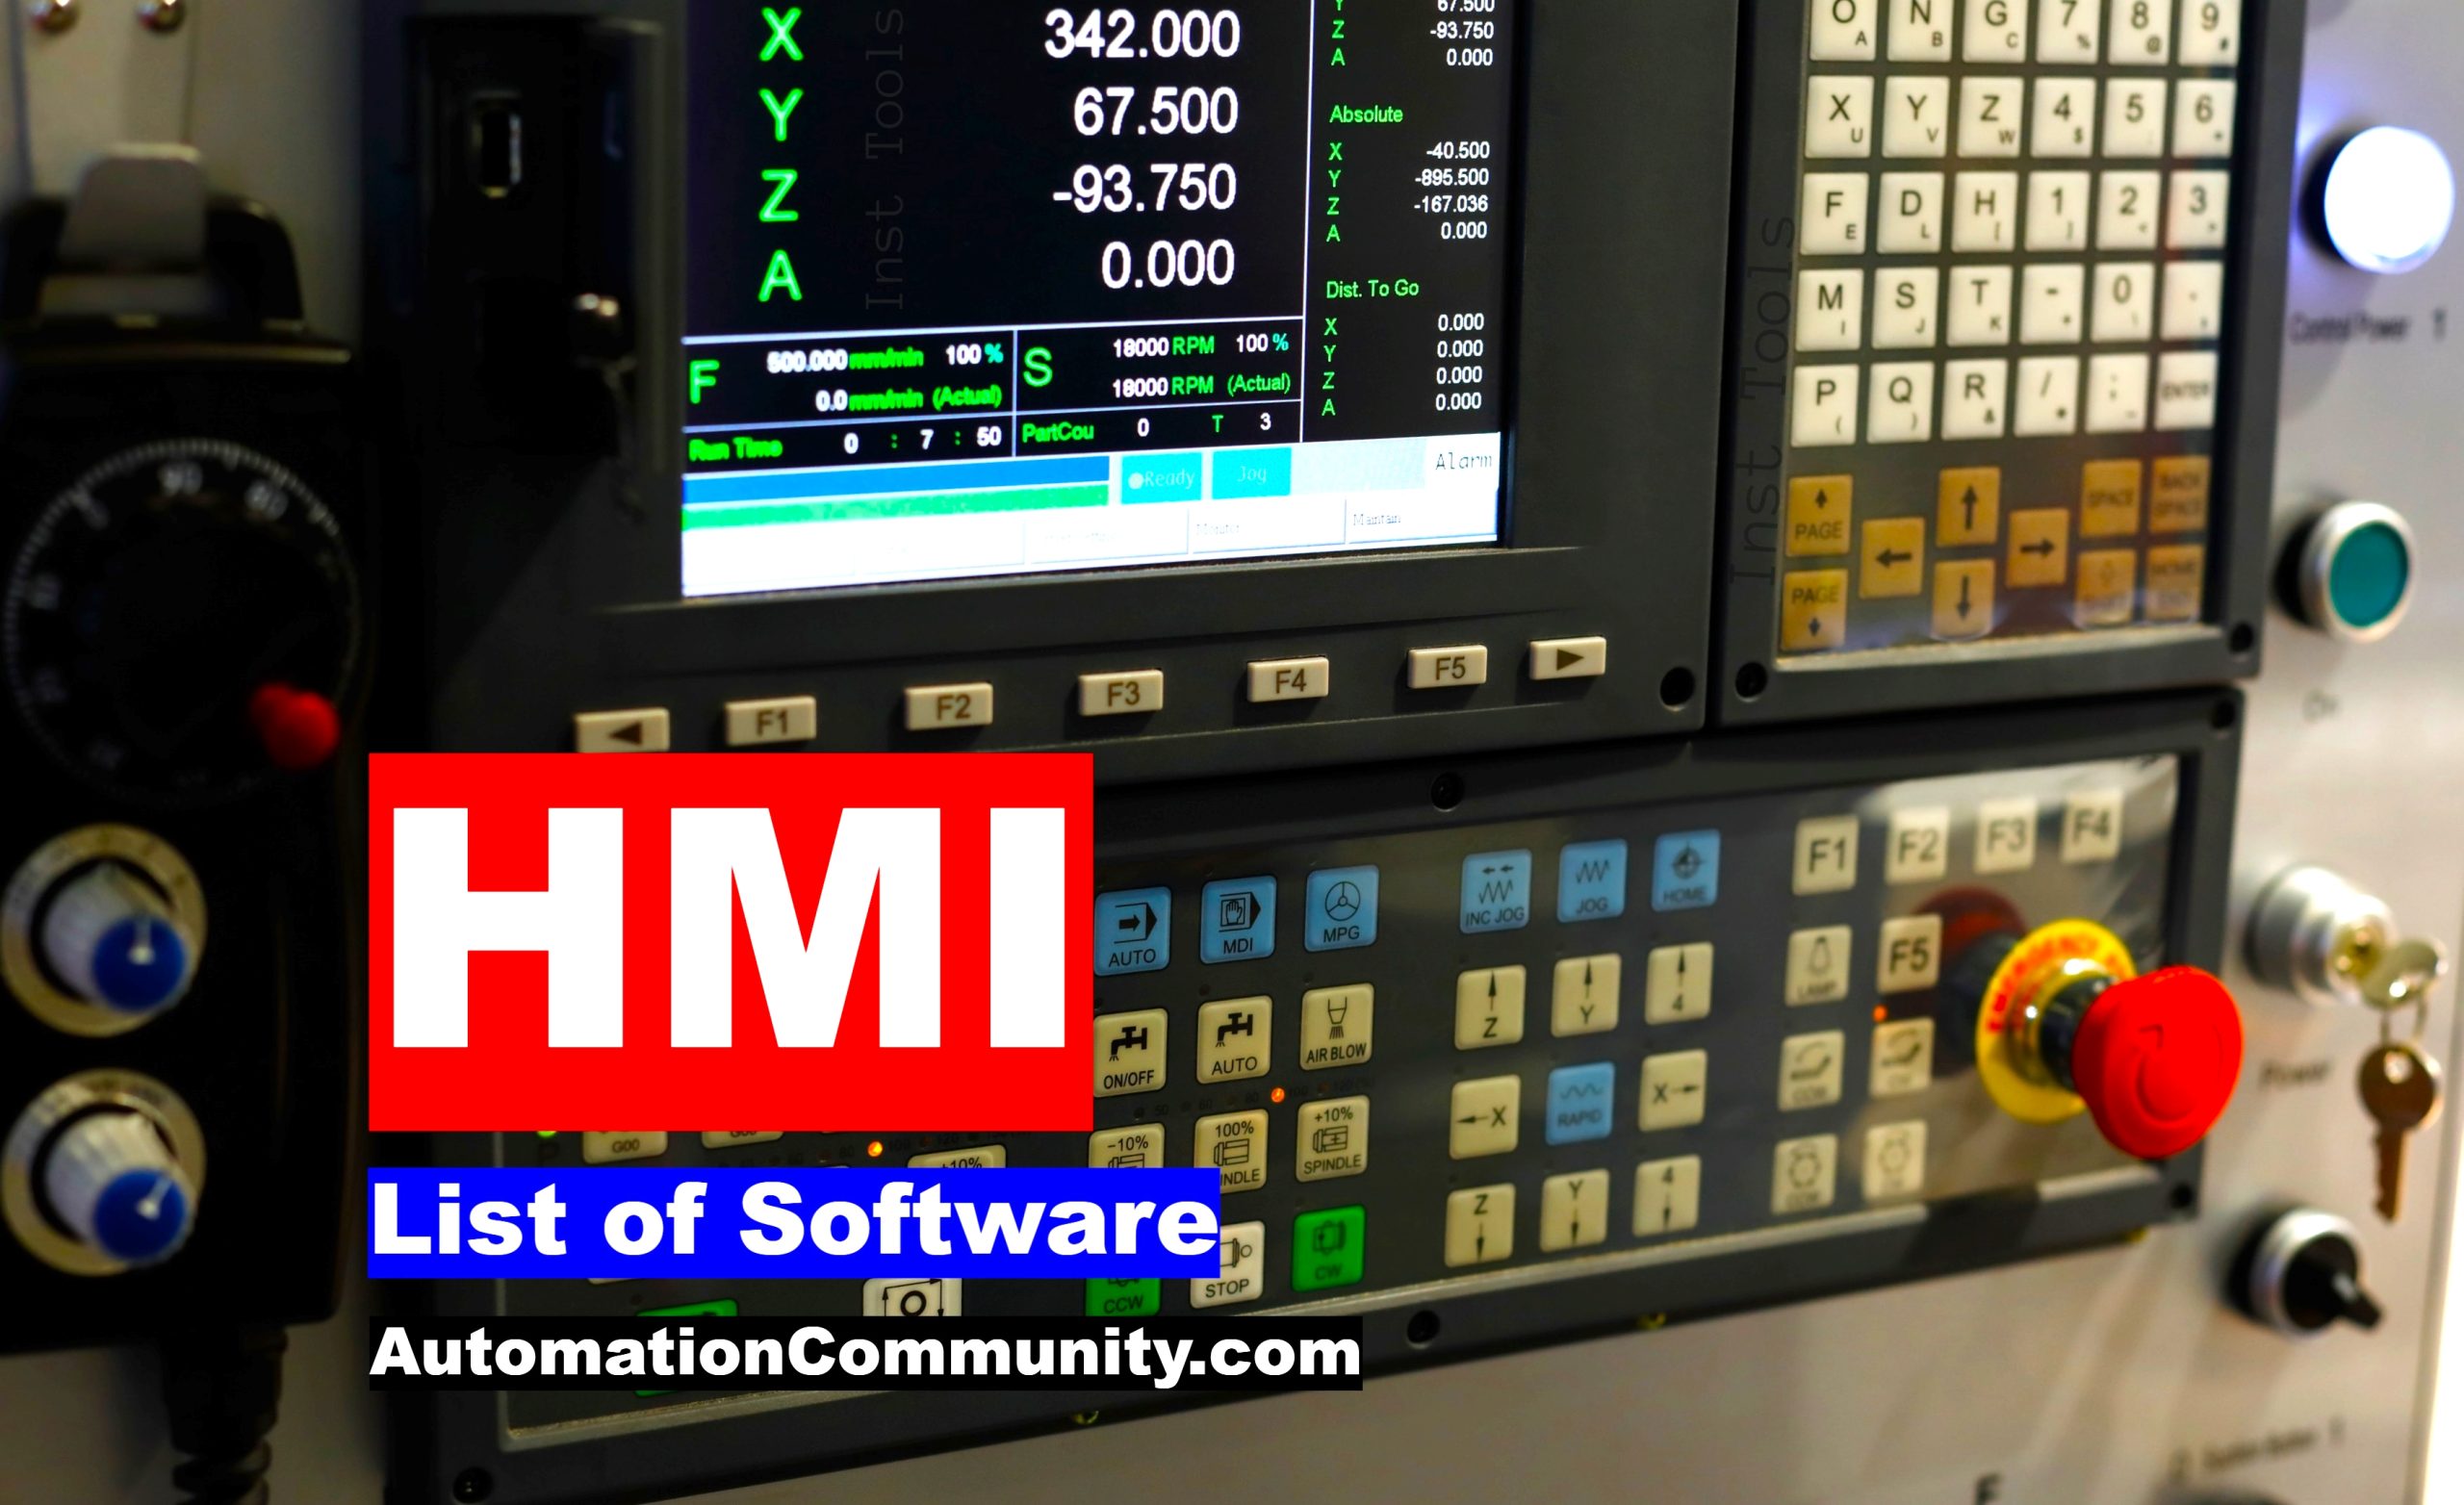 Top HMI Software List